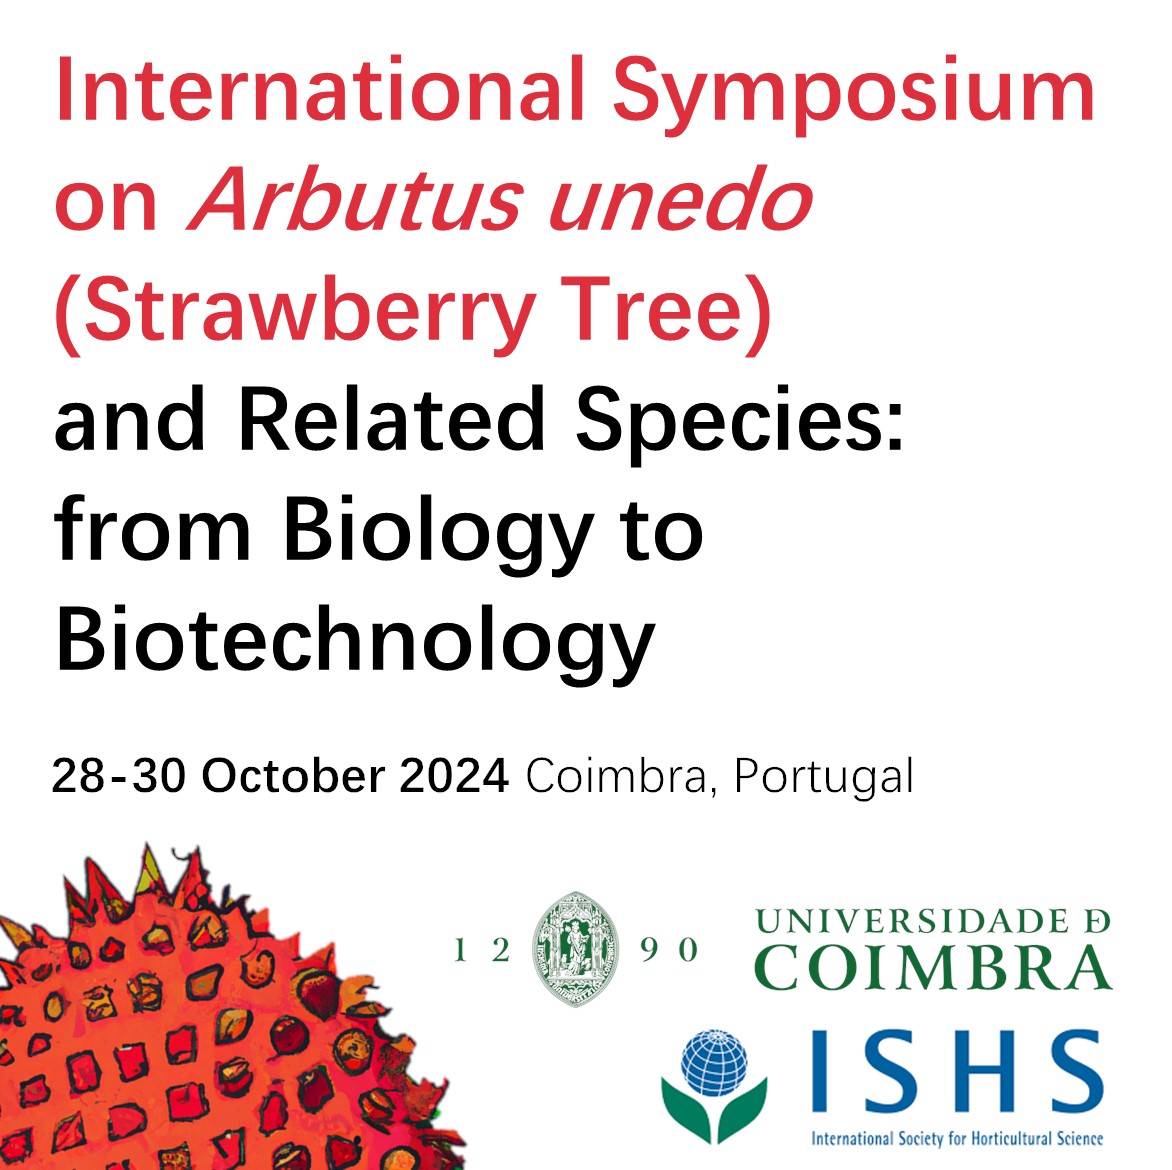 International Symposium on Arbutus unedo - Technical Tour